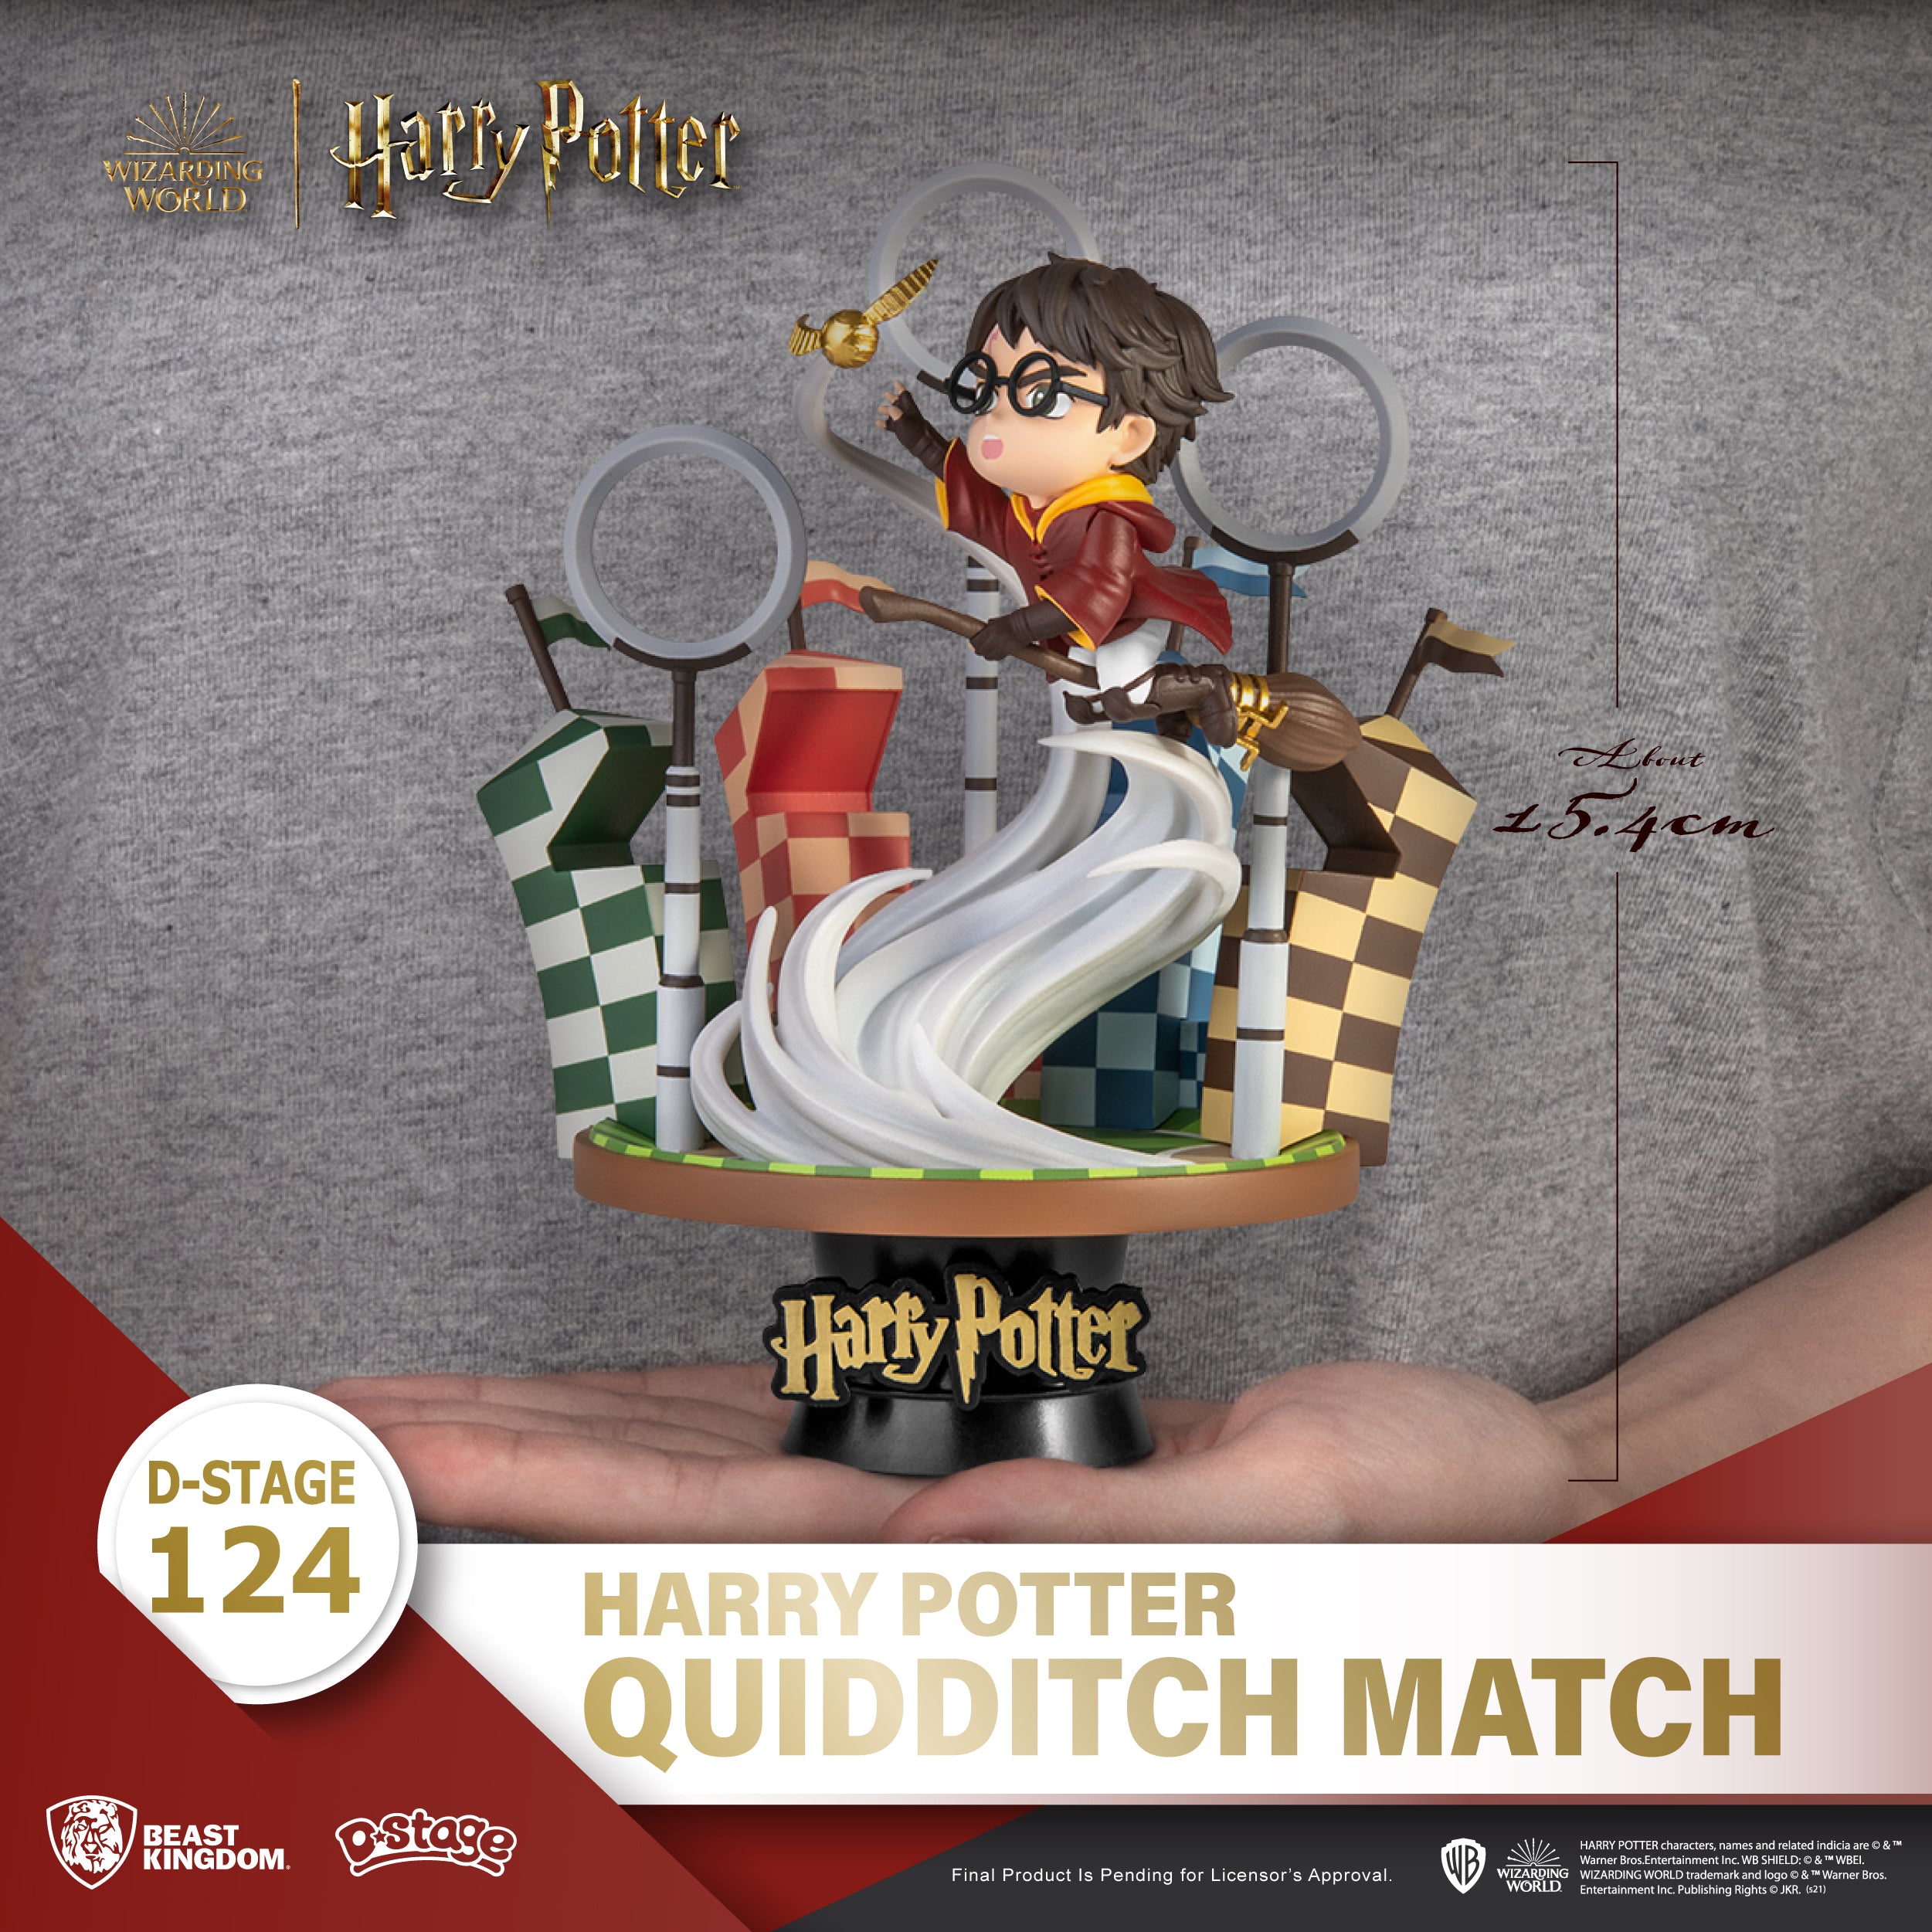 Harry Potter Harry vs. The Basilisk DS-123 D-Stage 6-Inch Statue